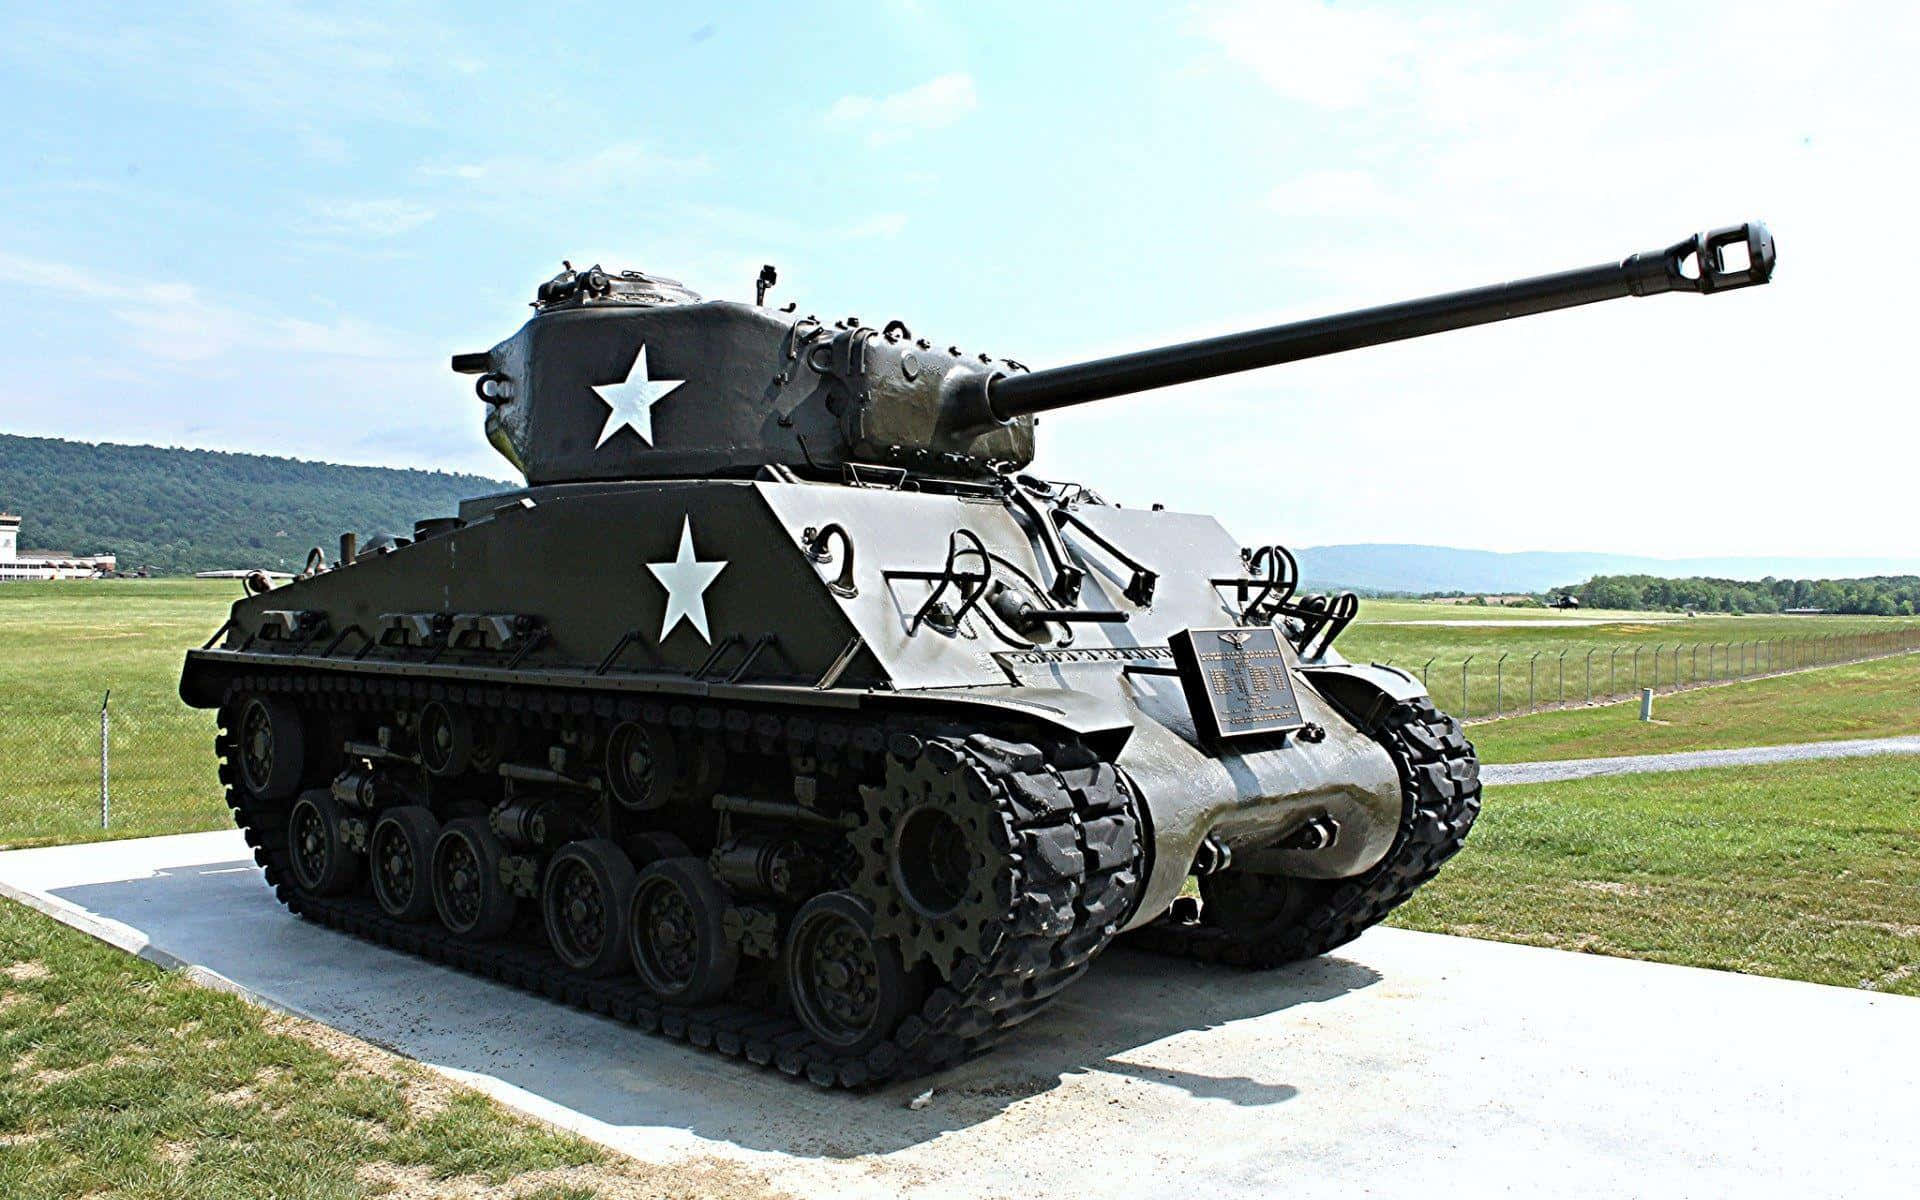 A Military Tank Rolls Through the Battlefield